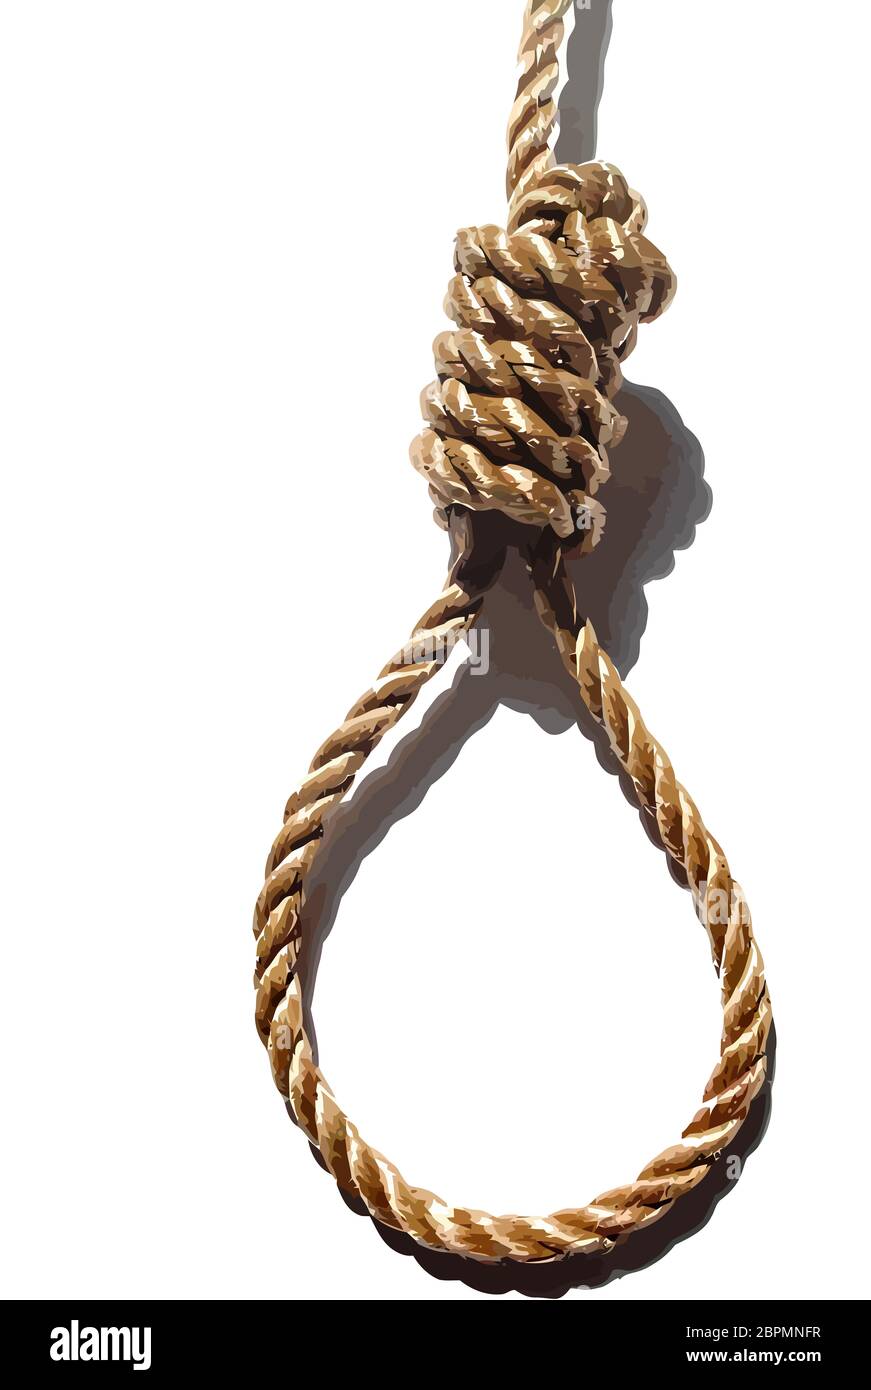 https://c8.alamy.com/comp/2BPMNFR/suicide-hanging-knot-noose-execution-justice-illustration-2BPMNFR.jpg